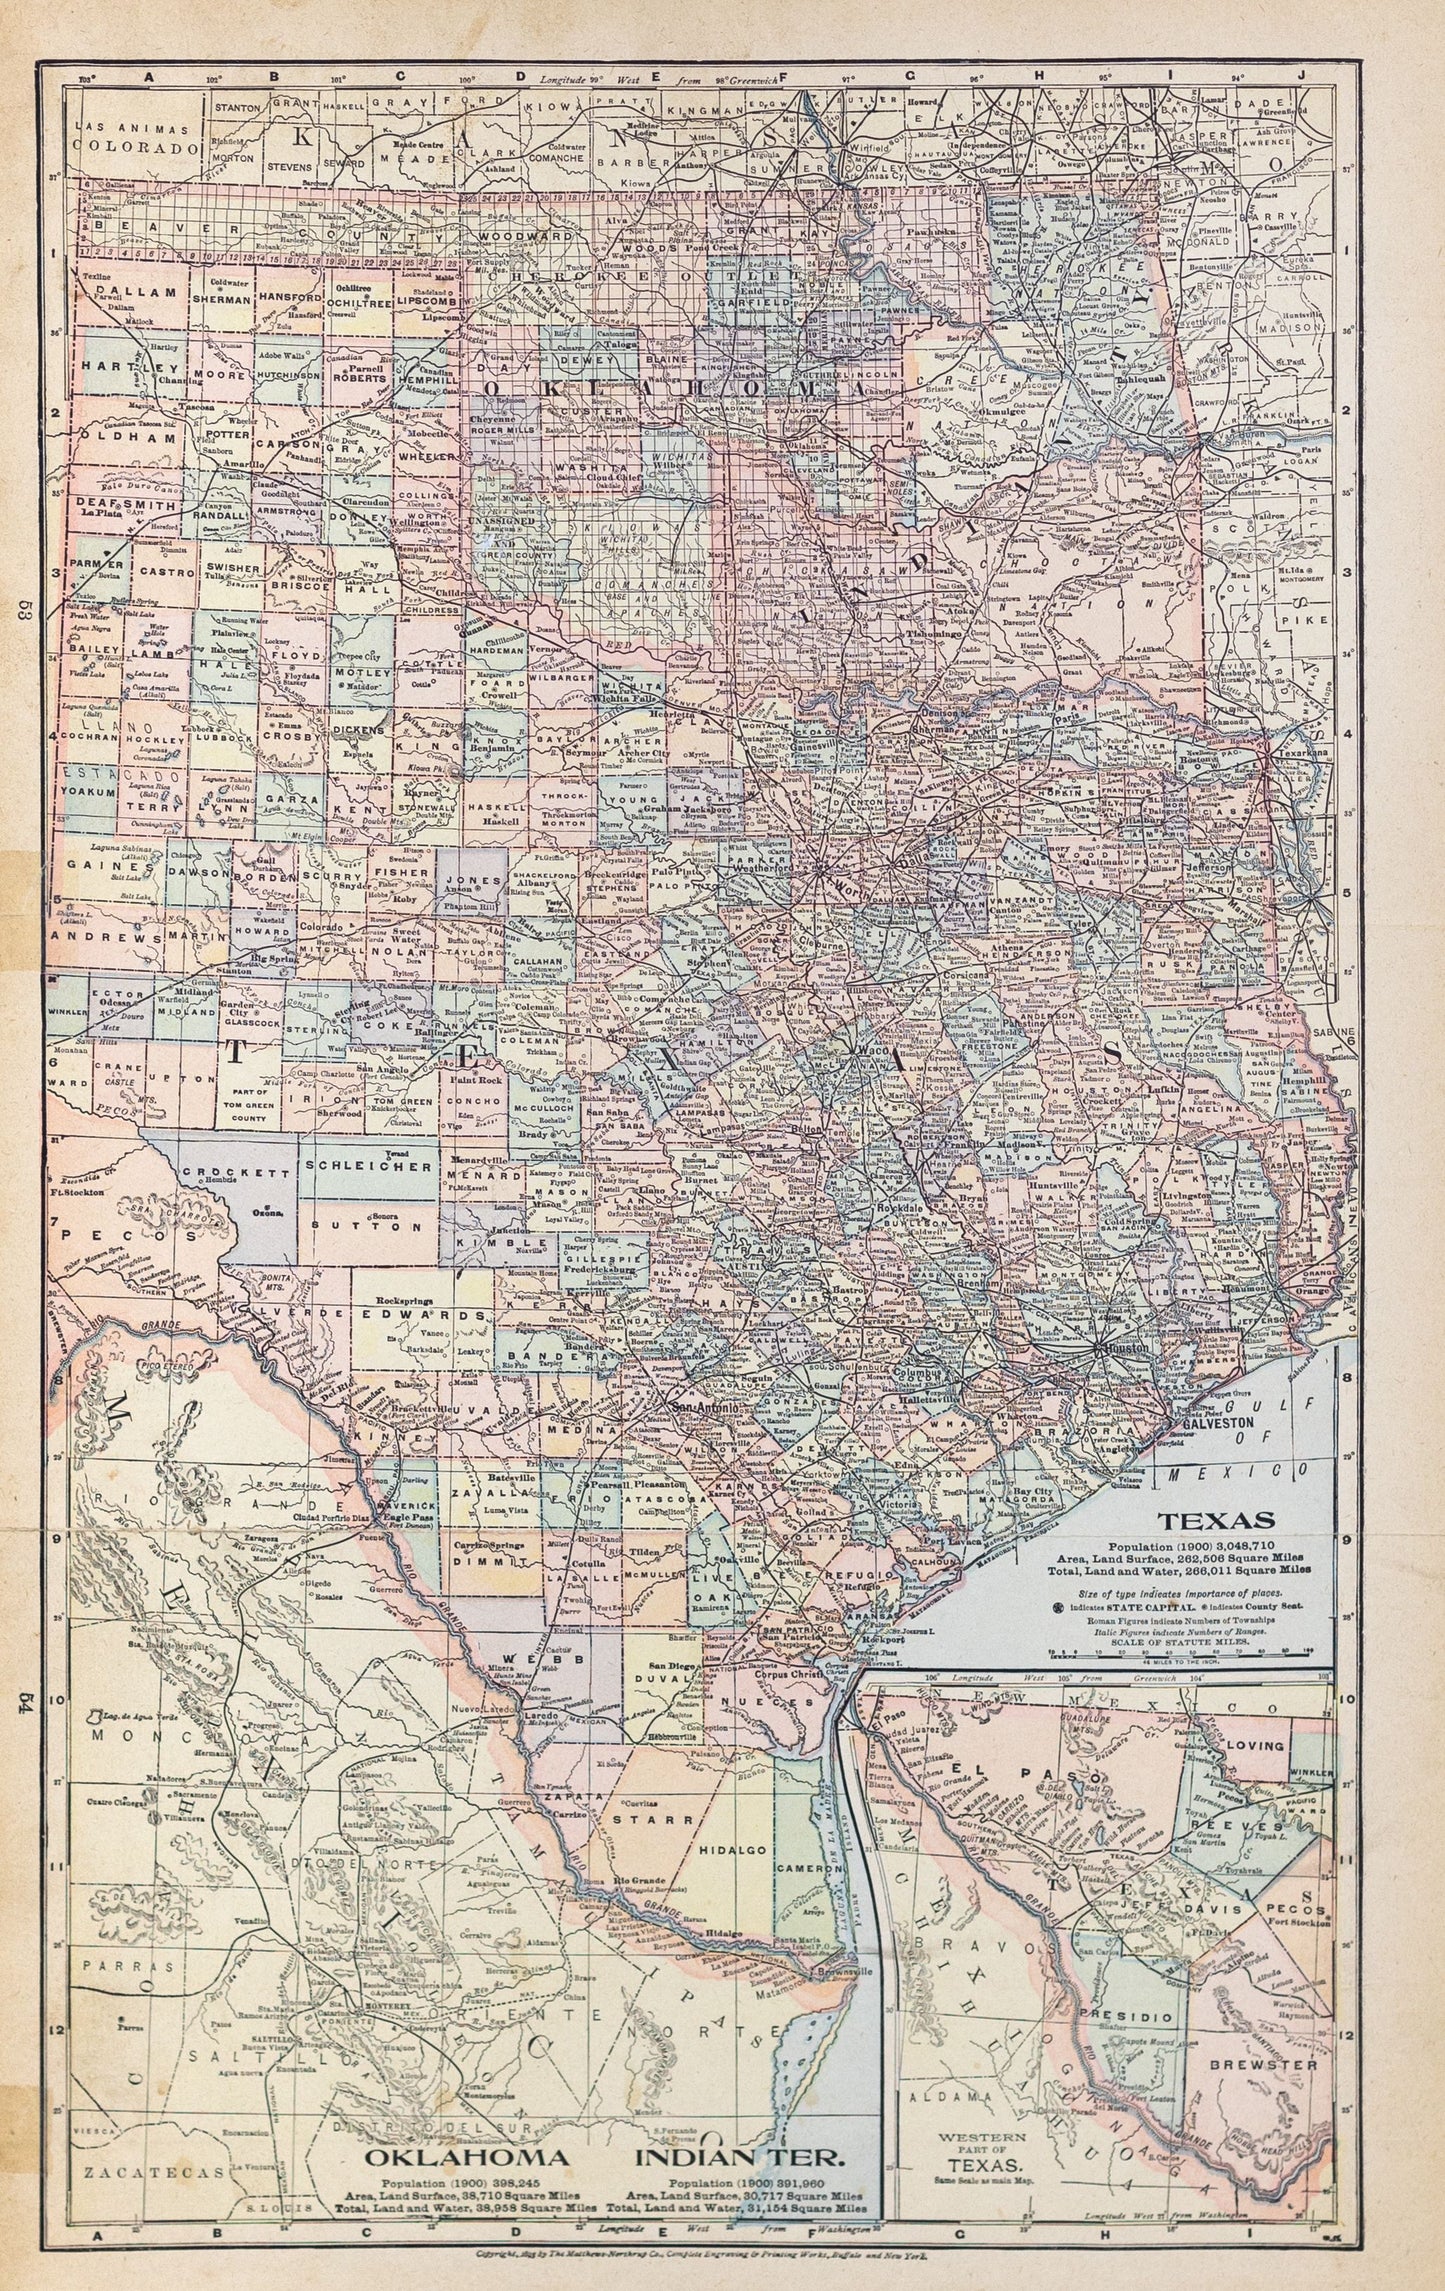 Matthews-Northrup Co.. Texas Population. New York, 1901.